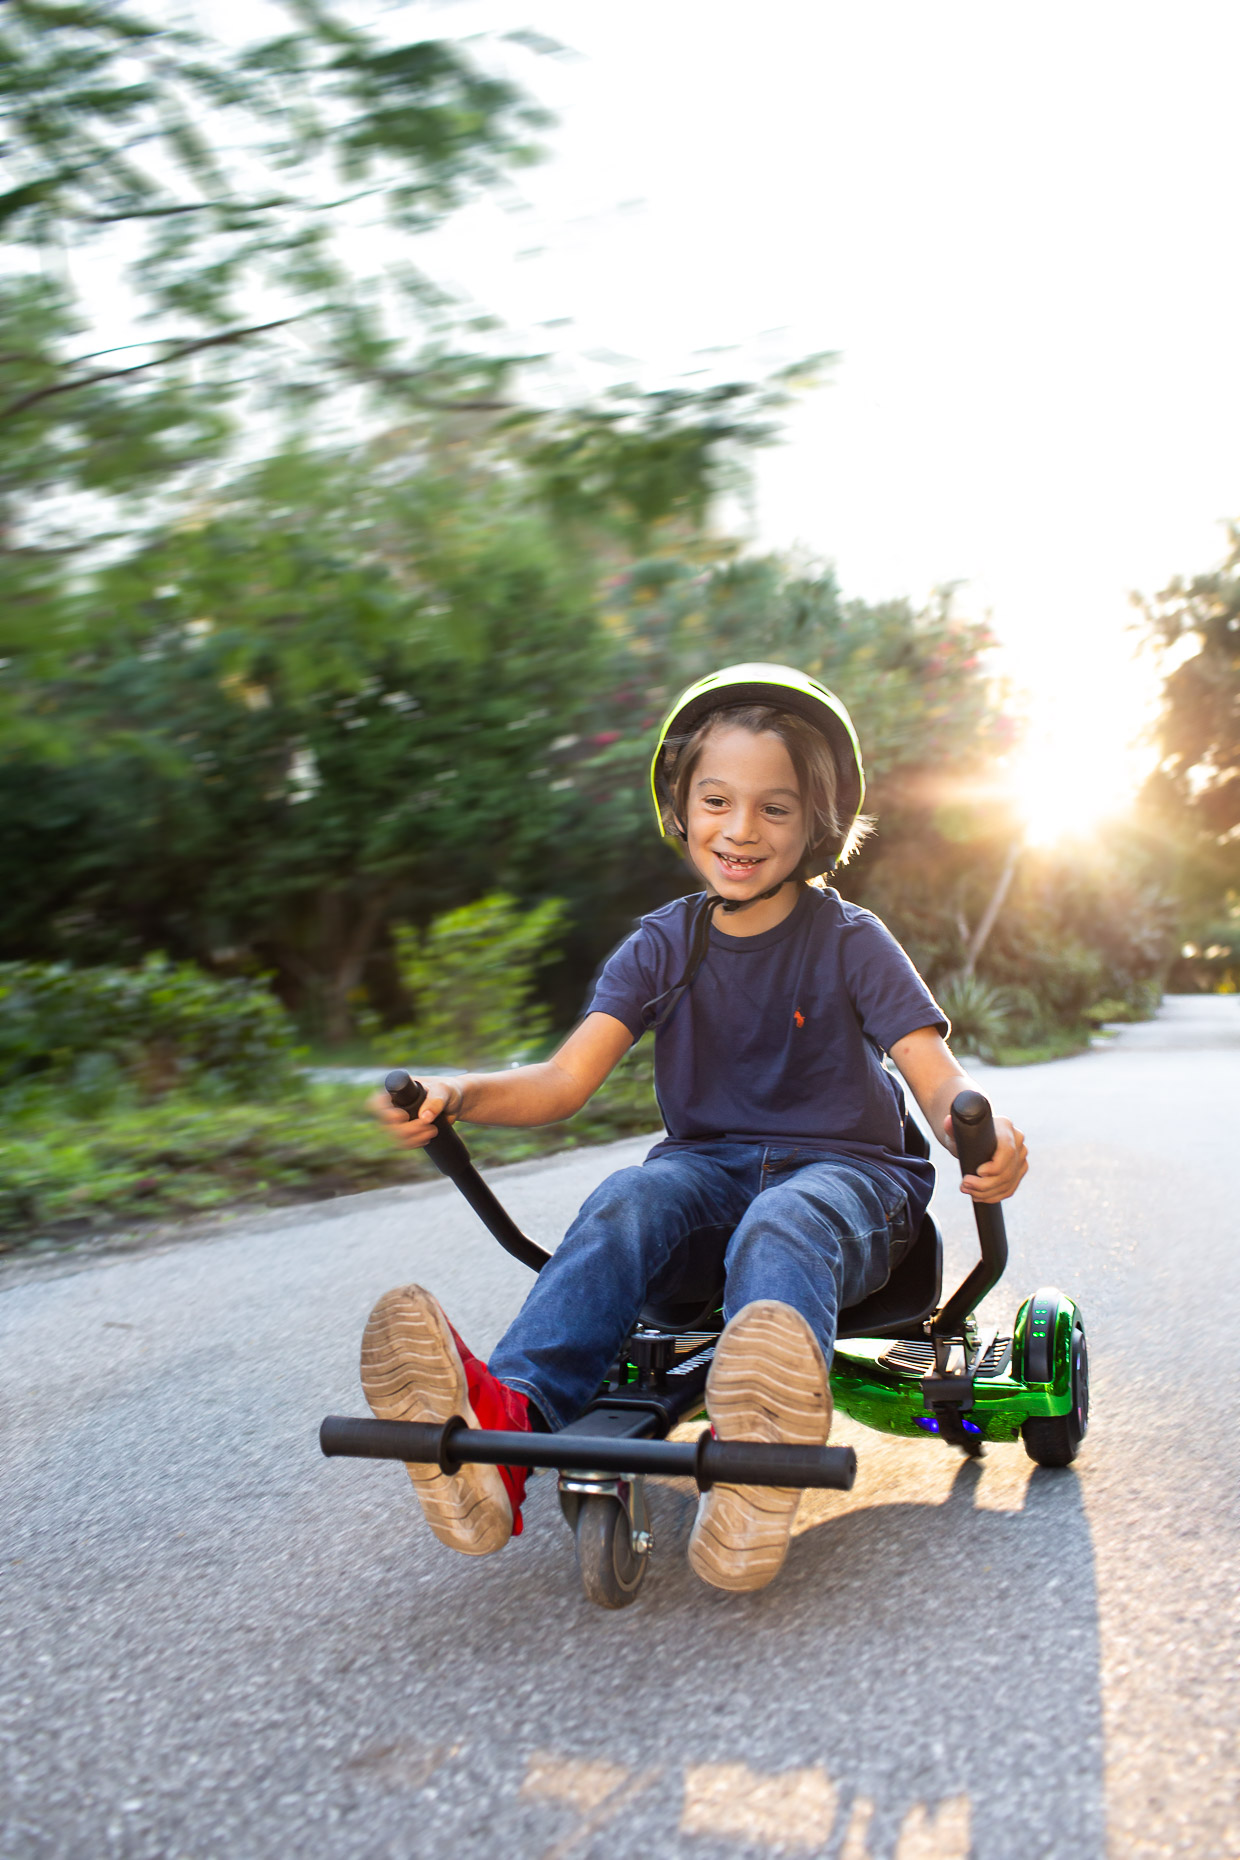 Young boy racing hover-board bike on road _MG_5192-Edit__RobertHolland